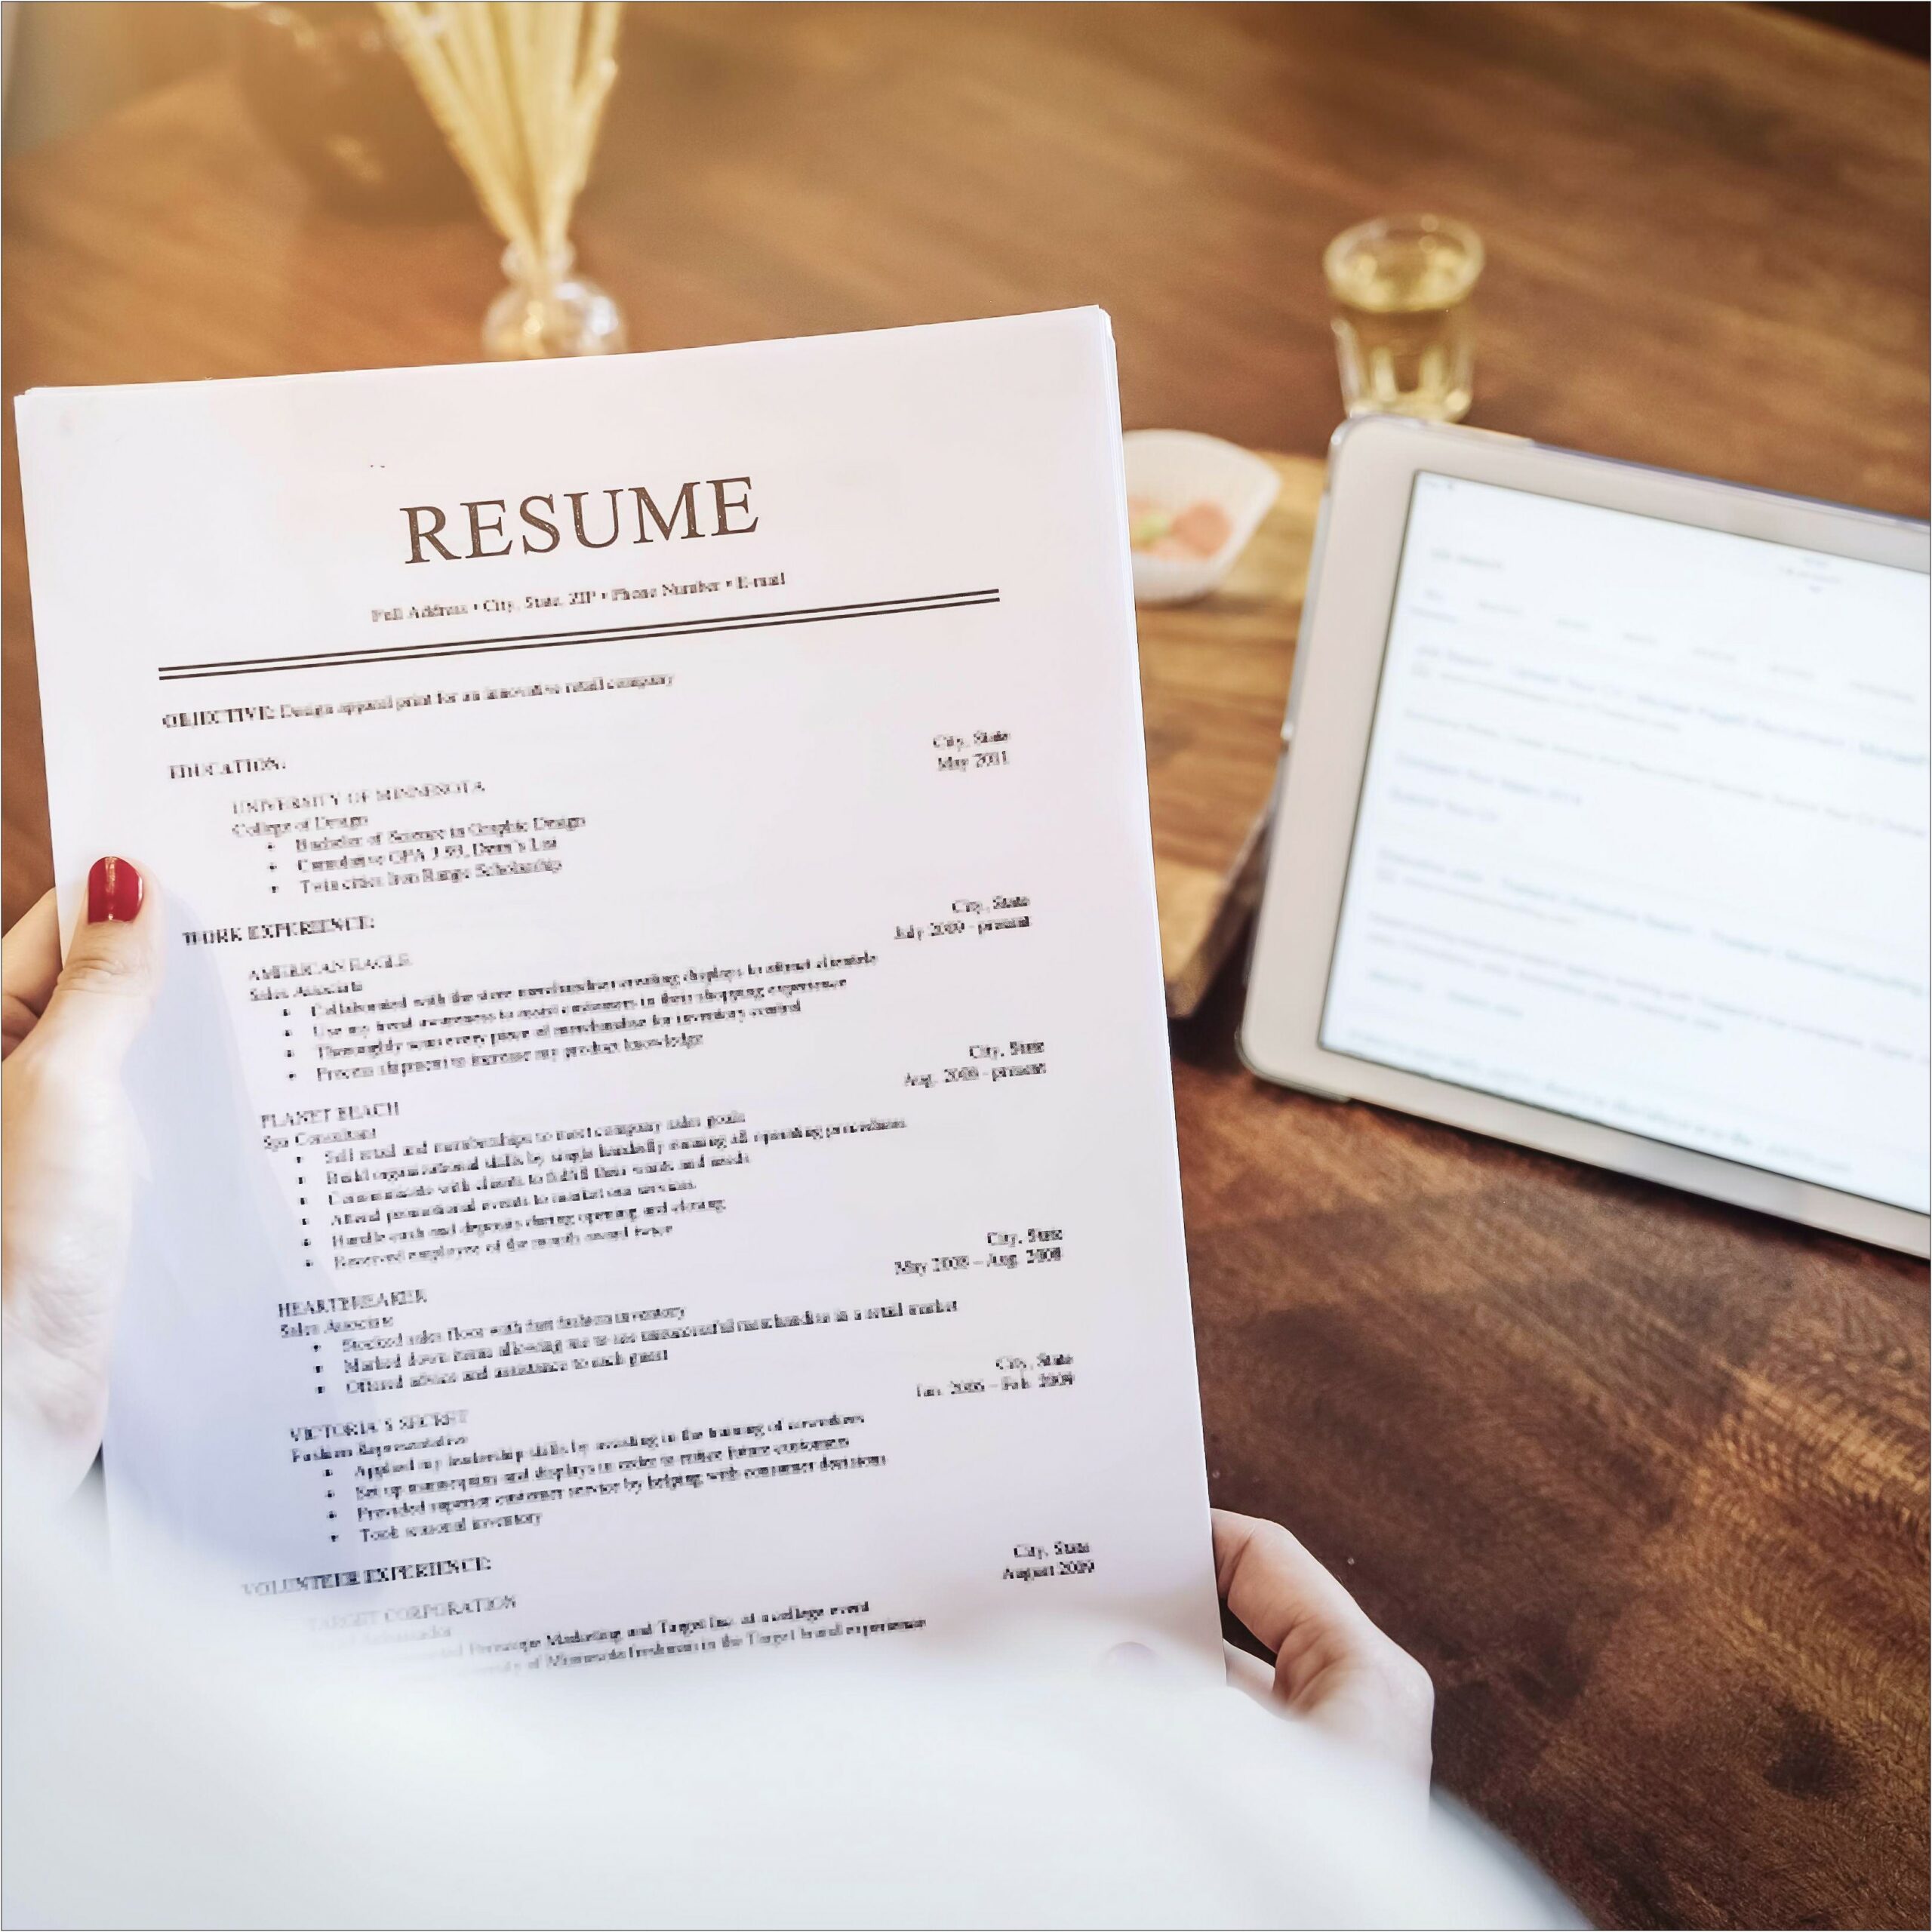 Sample Resume For Industry Job Application